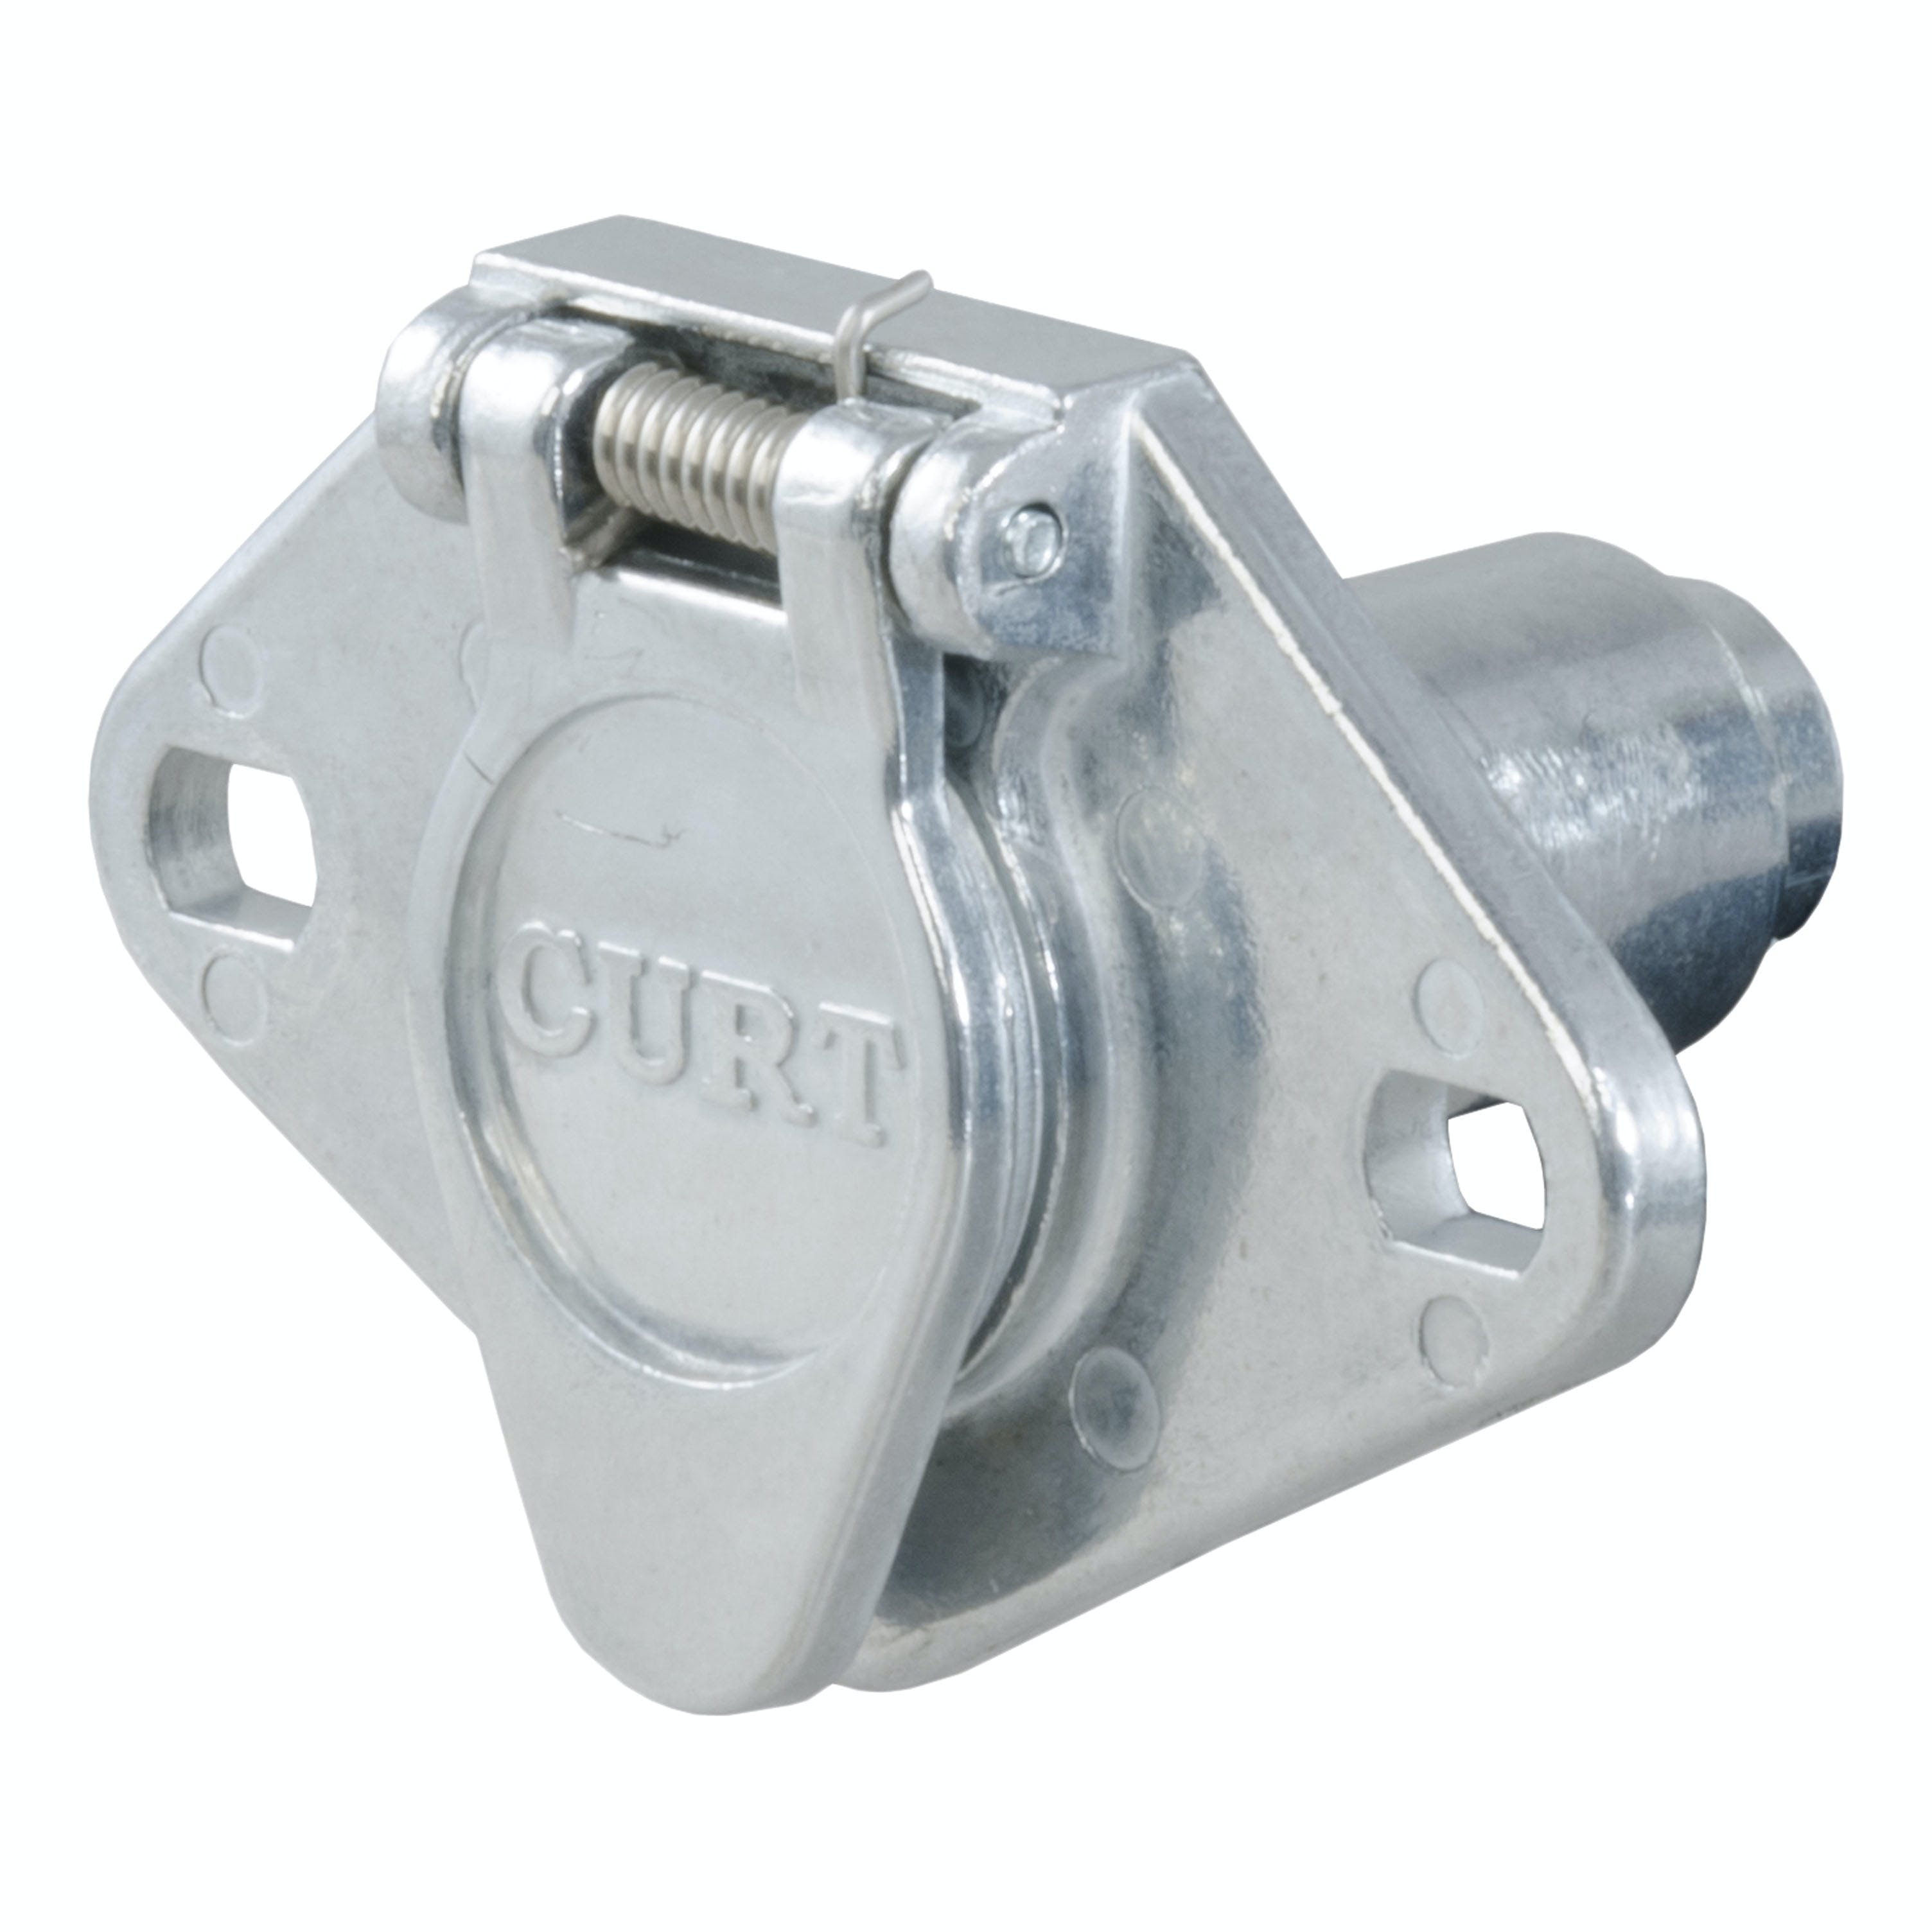 CURT 58090 6-Way Round Connector Socket (Vehicle Side, Diecast Metal)